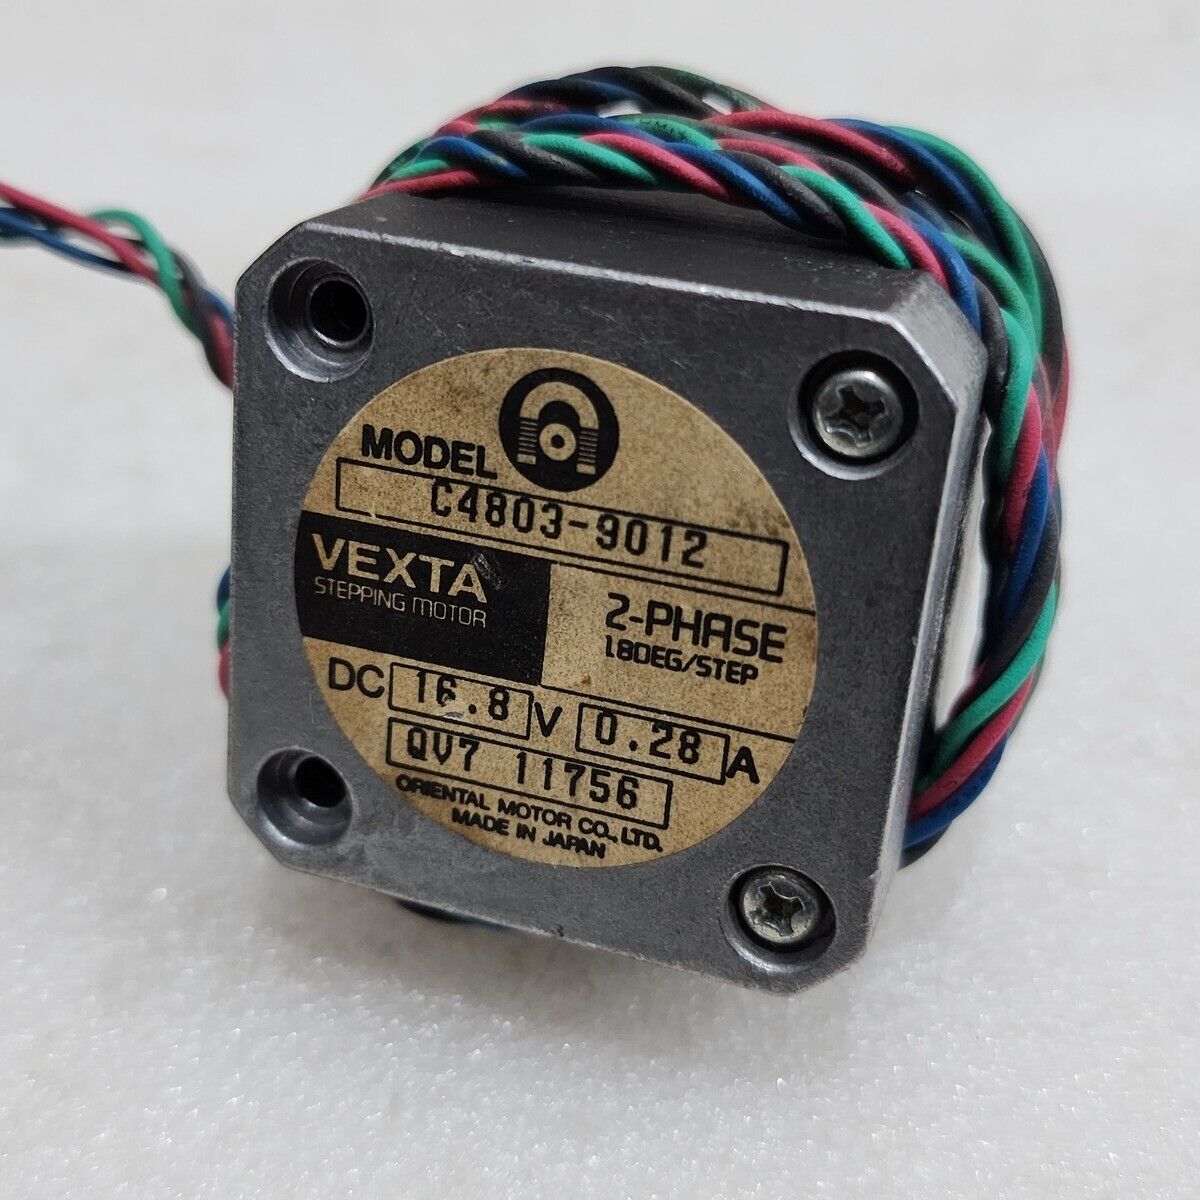 VEXTA C4803-9012 STEPPING MOTOR 16.8VDC 0.28A